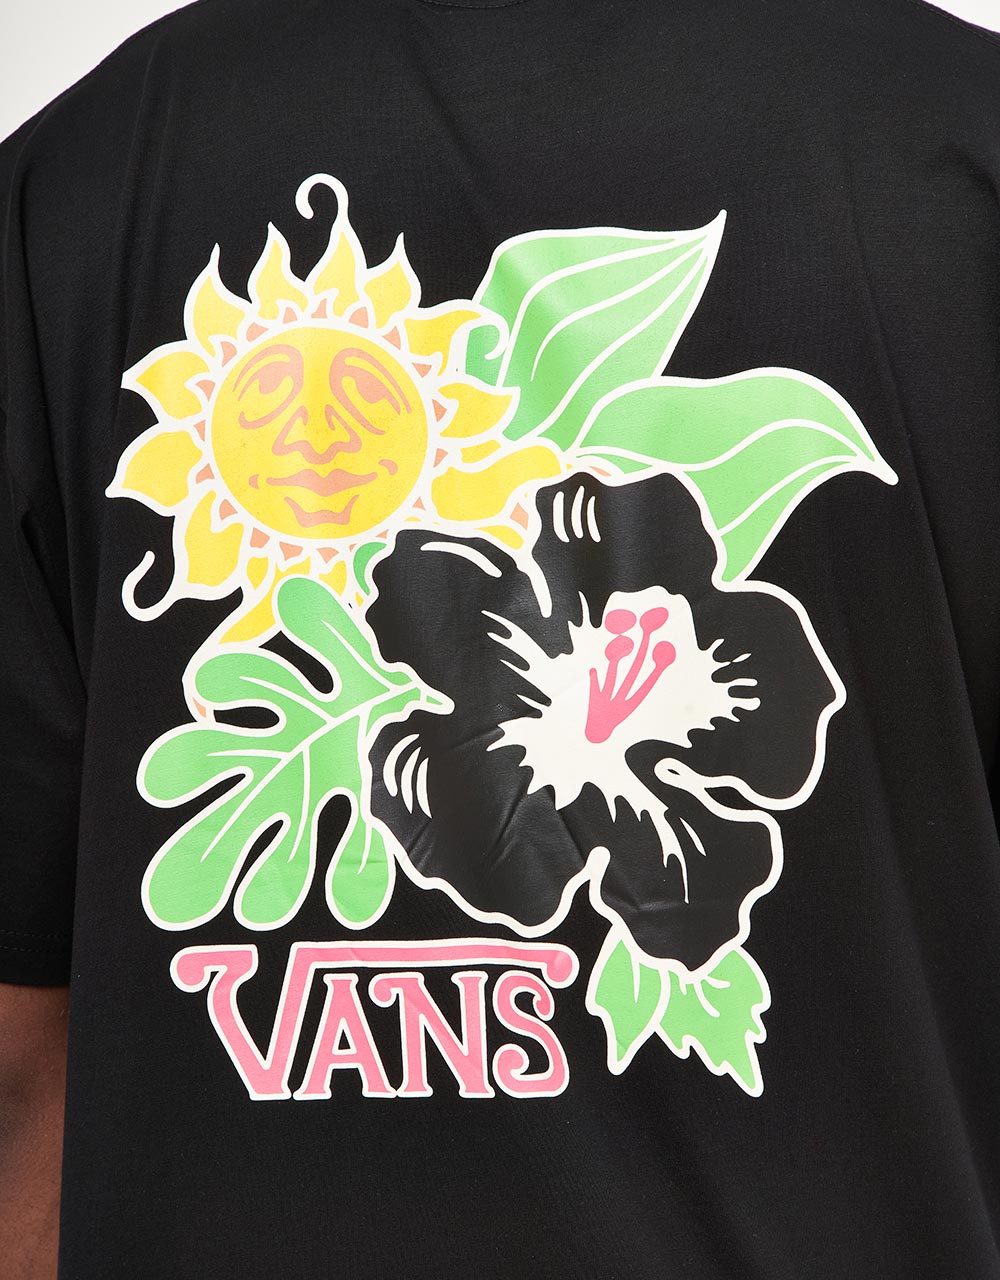 Vans All Day T-Shirt - Black